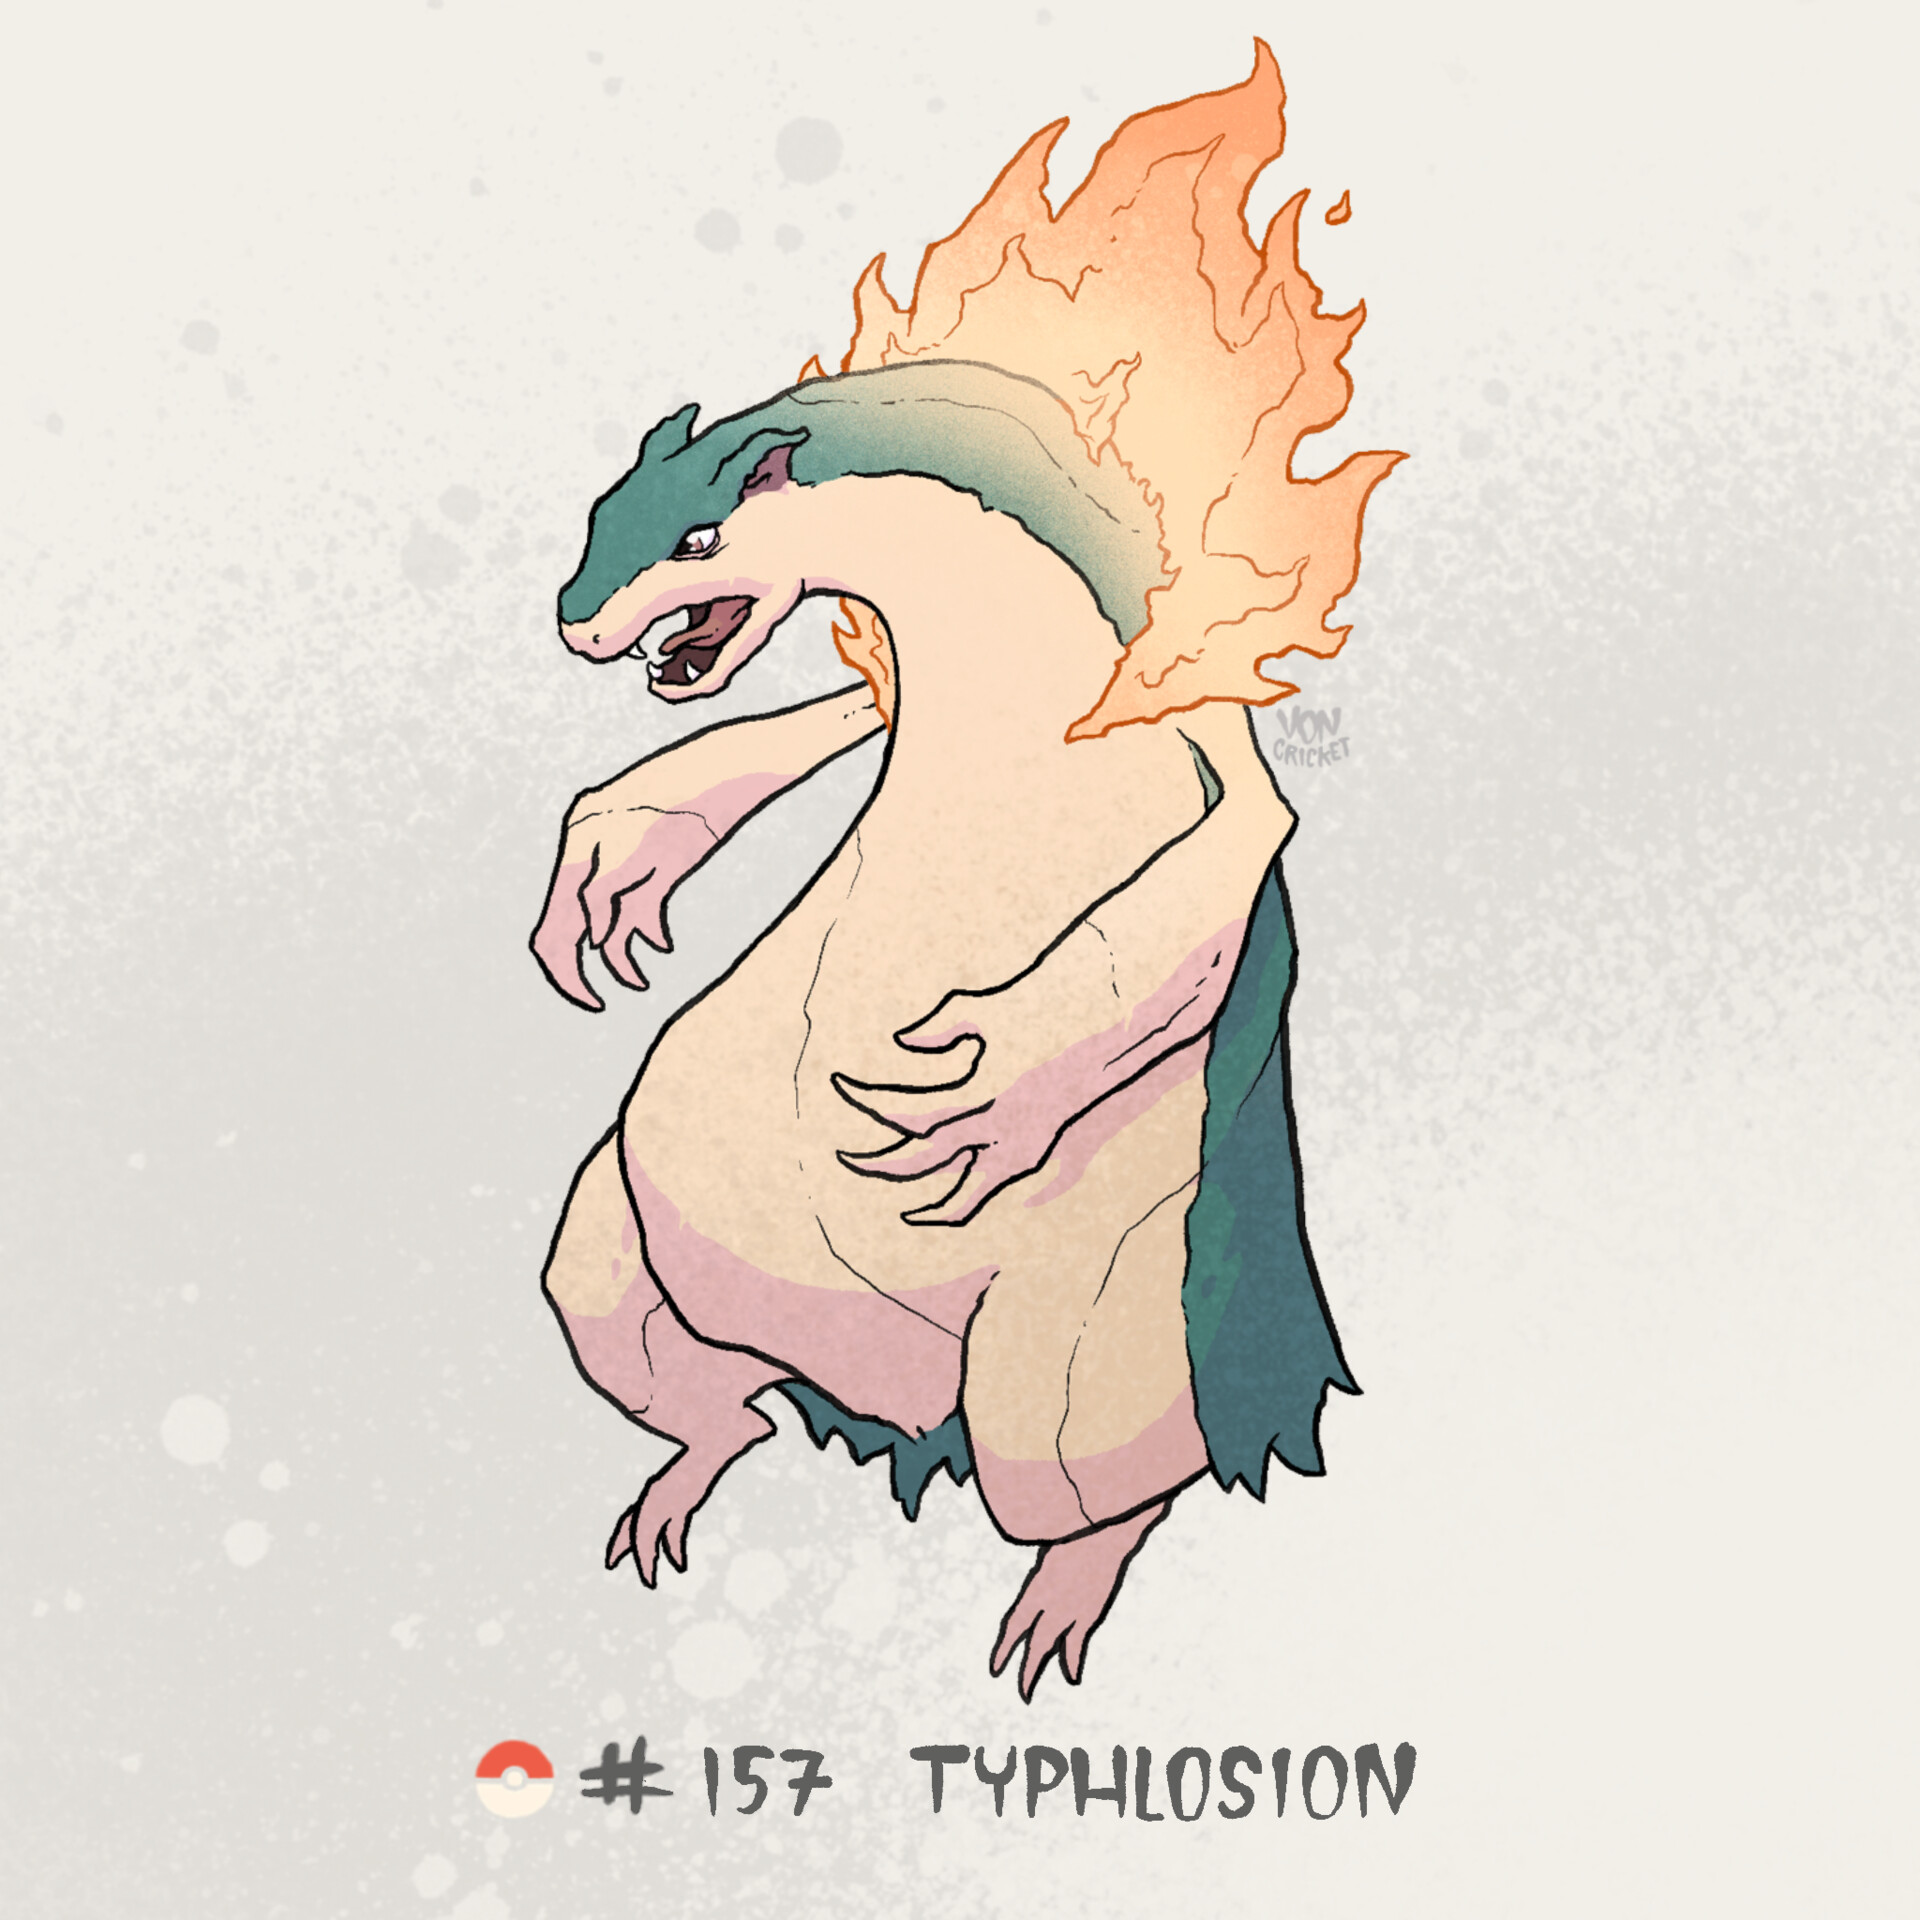 Typhlosion - #157 -  Pokédex